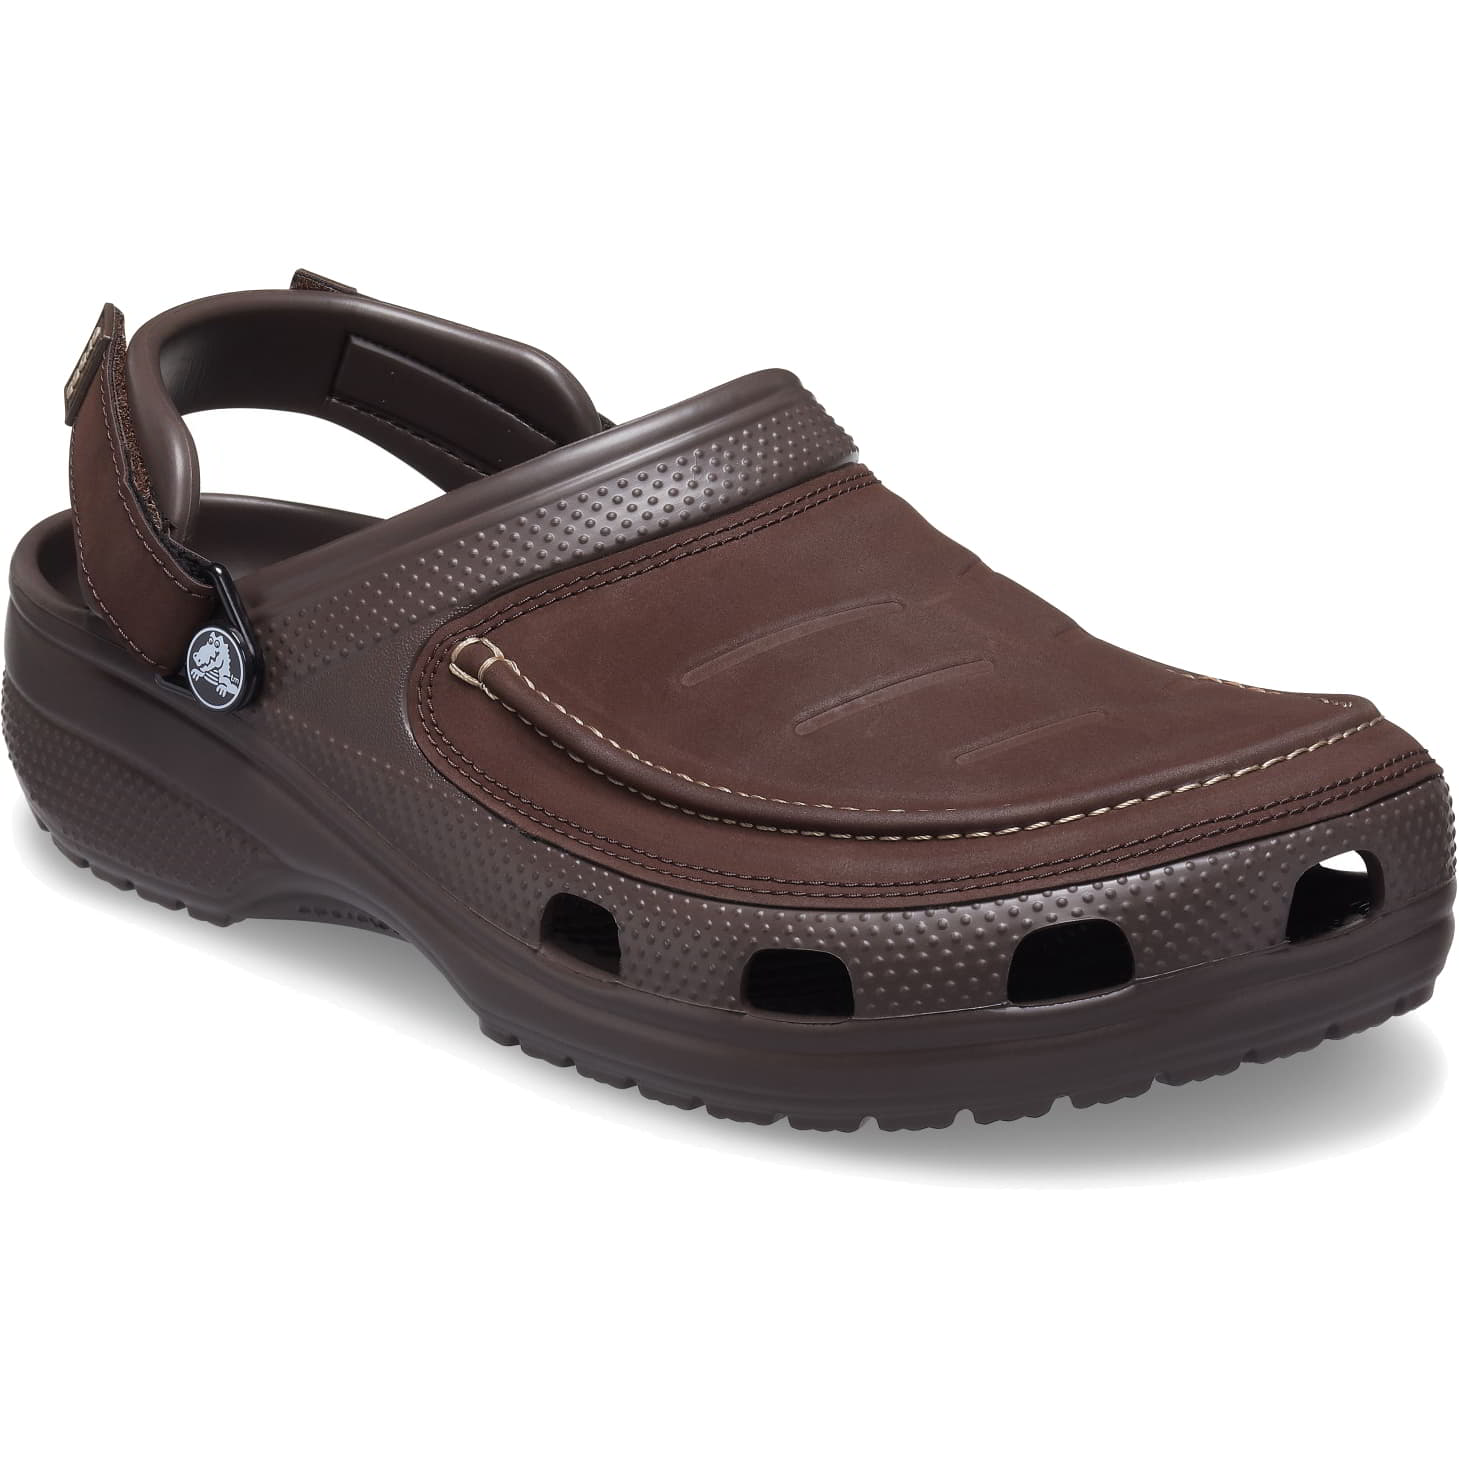 Crocs Men's Yukon Vista II Clog Slip On Clogs Shoes Sandals - UK 14 / EU 50-51 / M15